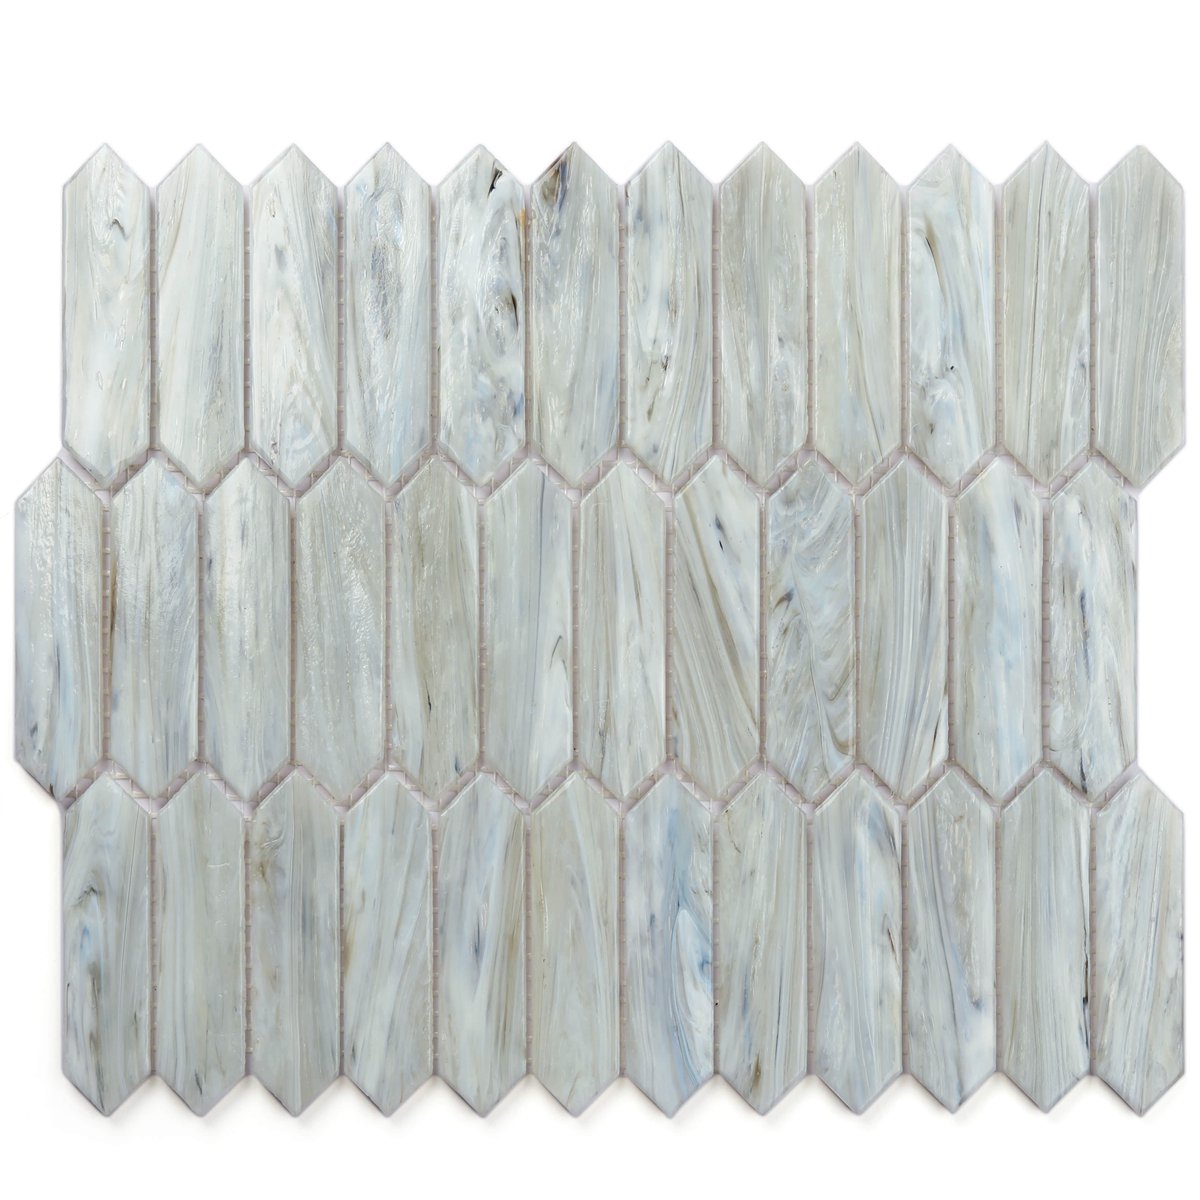 Textured glass tile kitchen backsplash